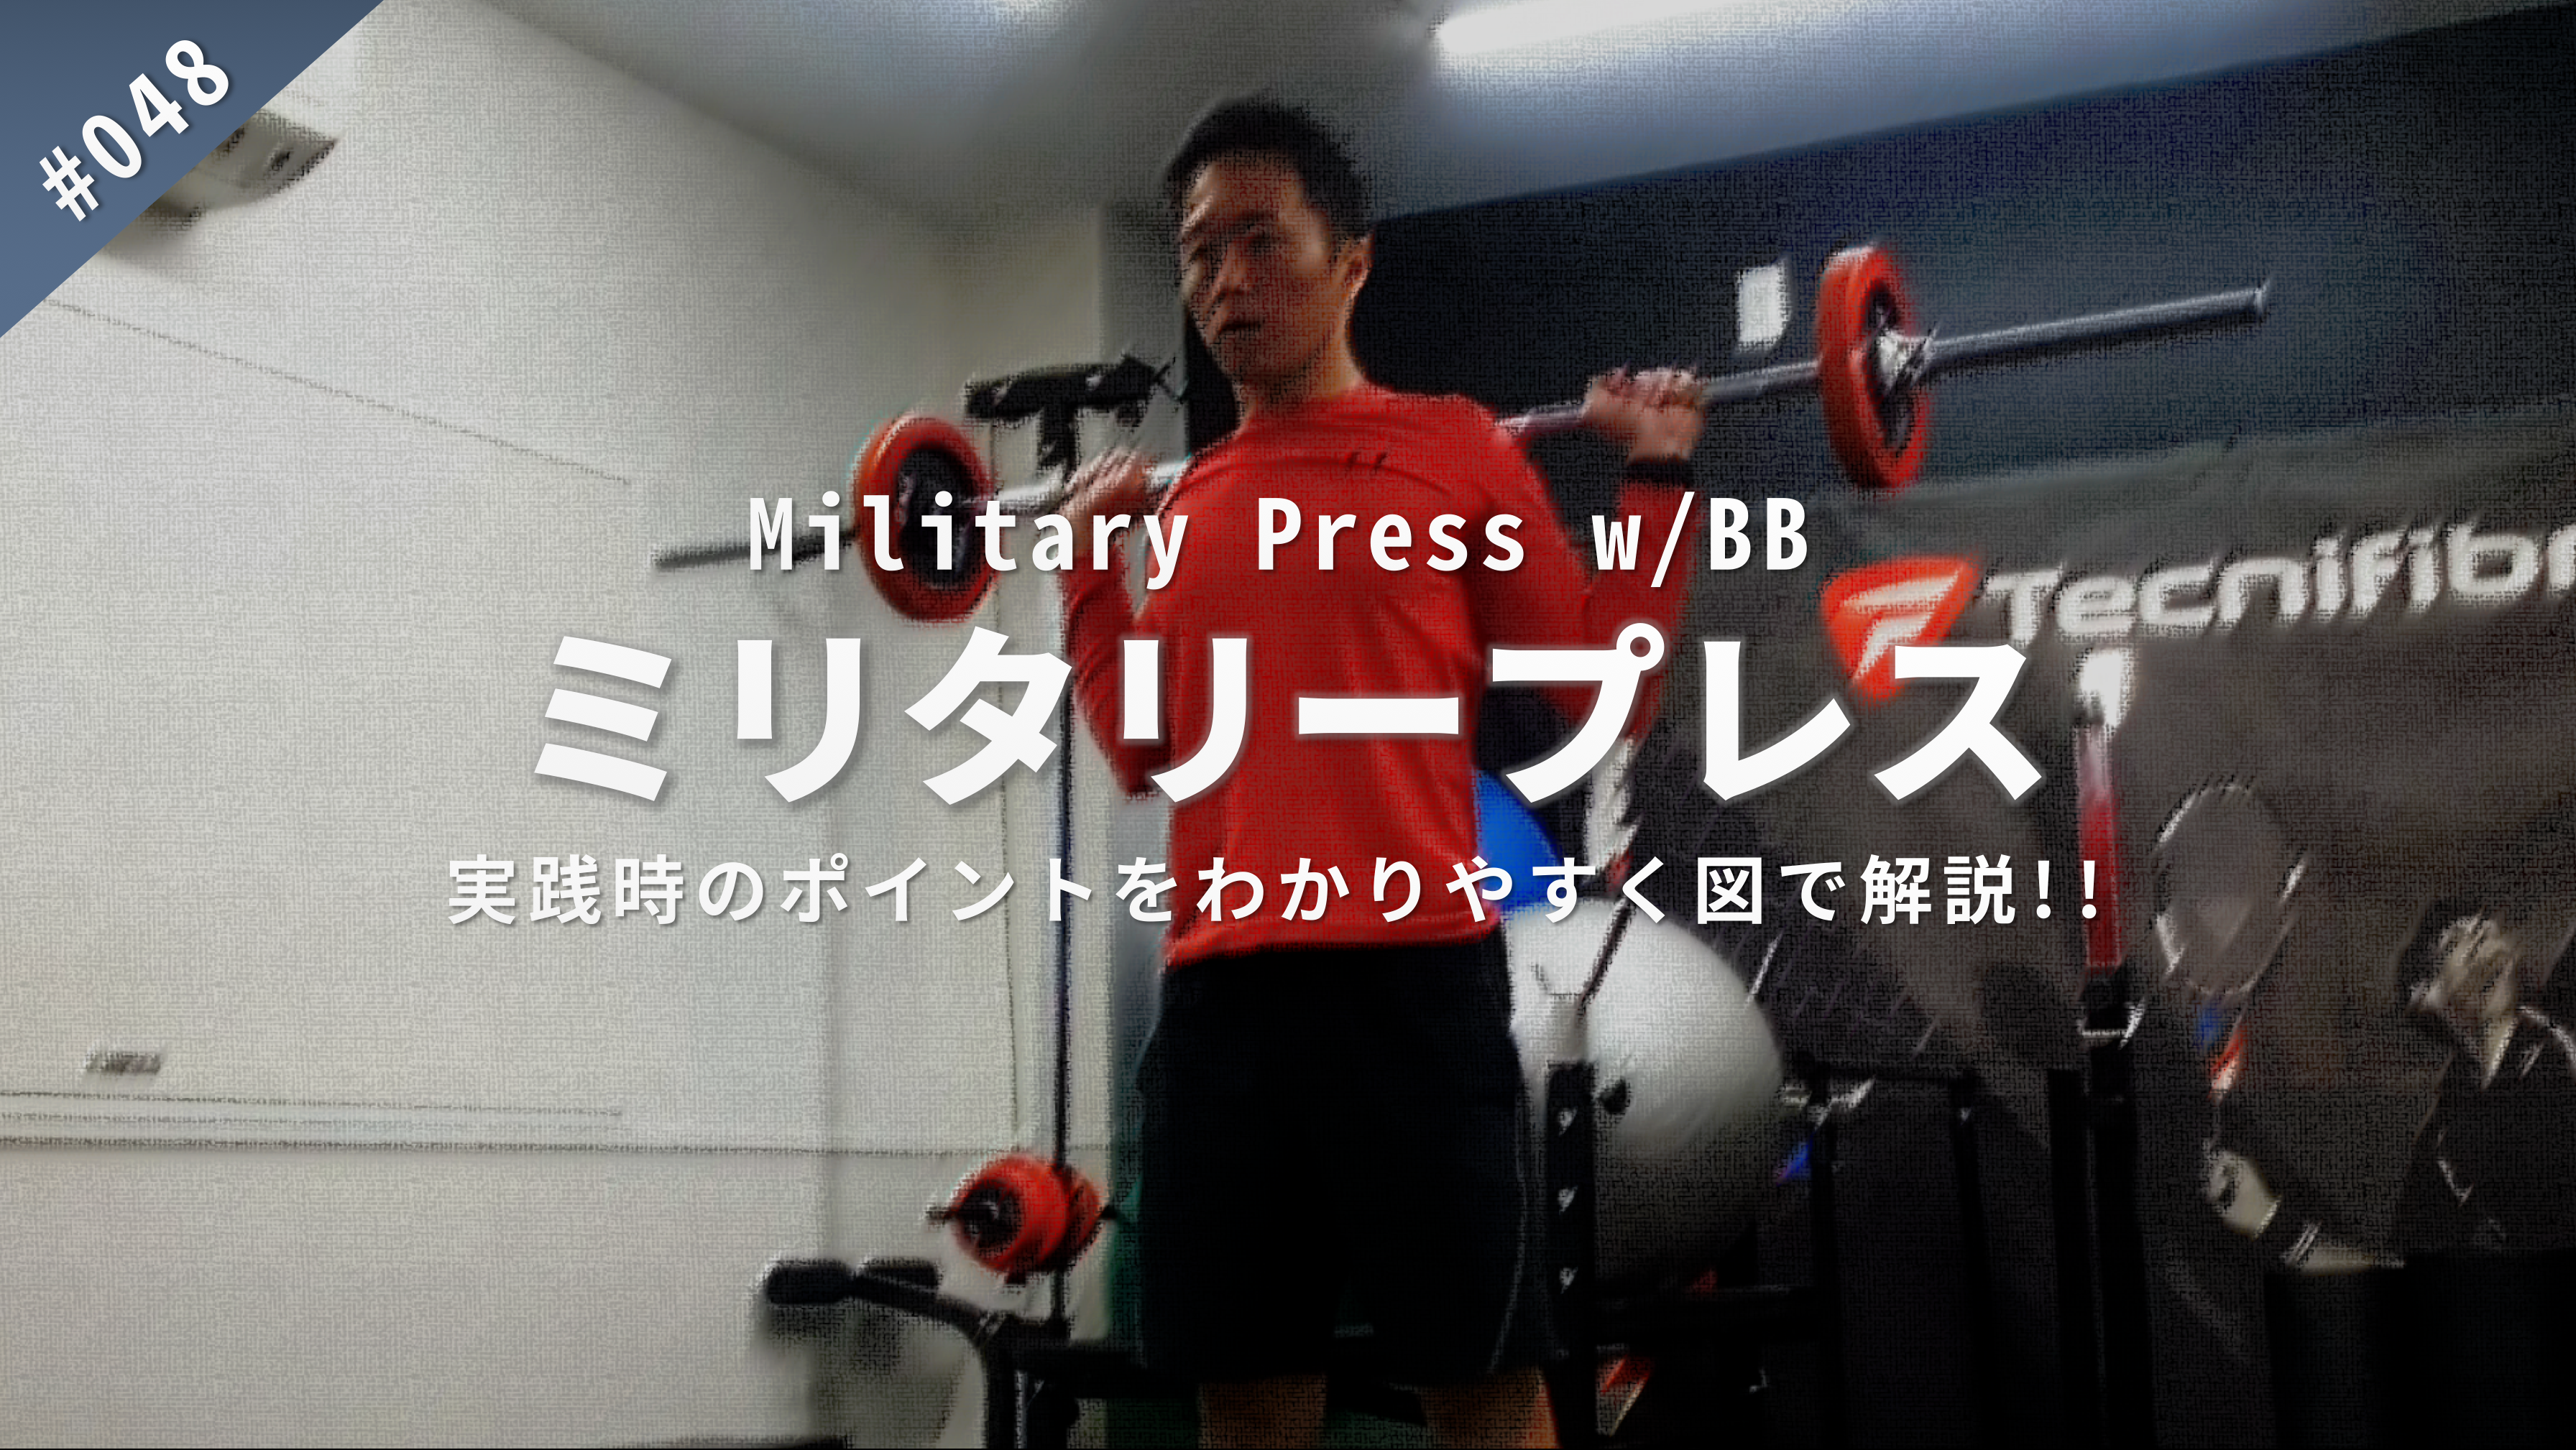 Training Movie 048 ミリタリープレス Military Press W 上半身 B Lead 大阪 出張パーソナルトレーニング オンラインliveパーソナルトレーニング